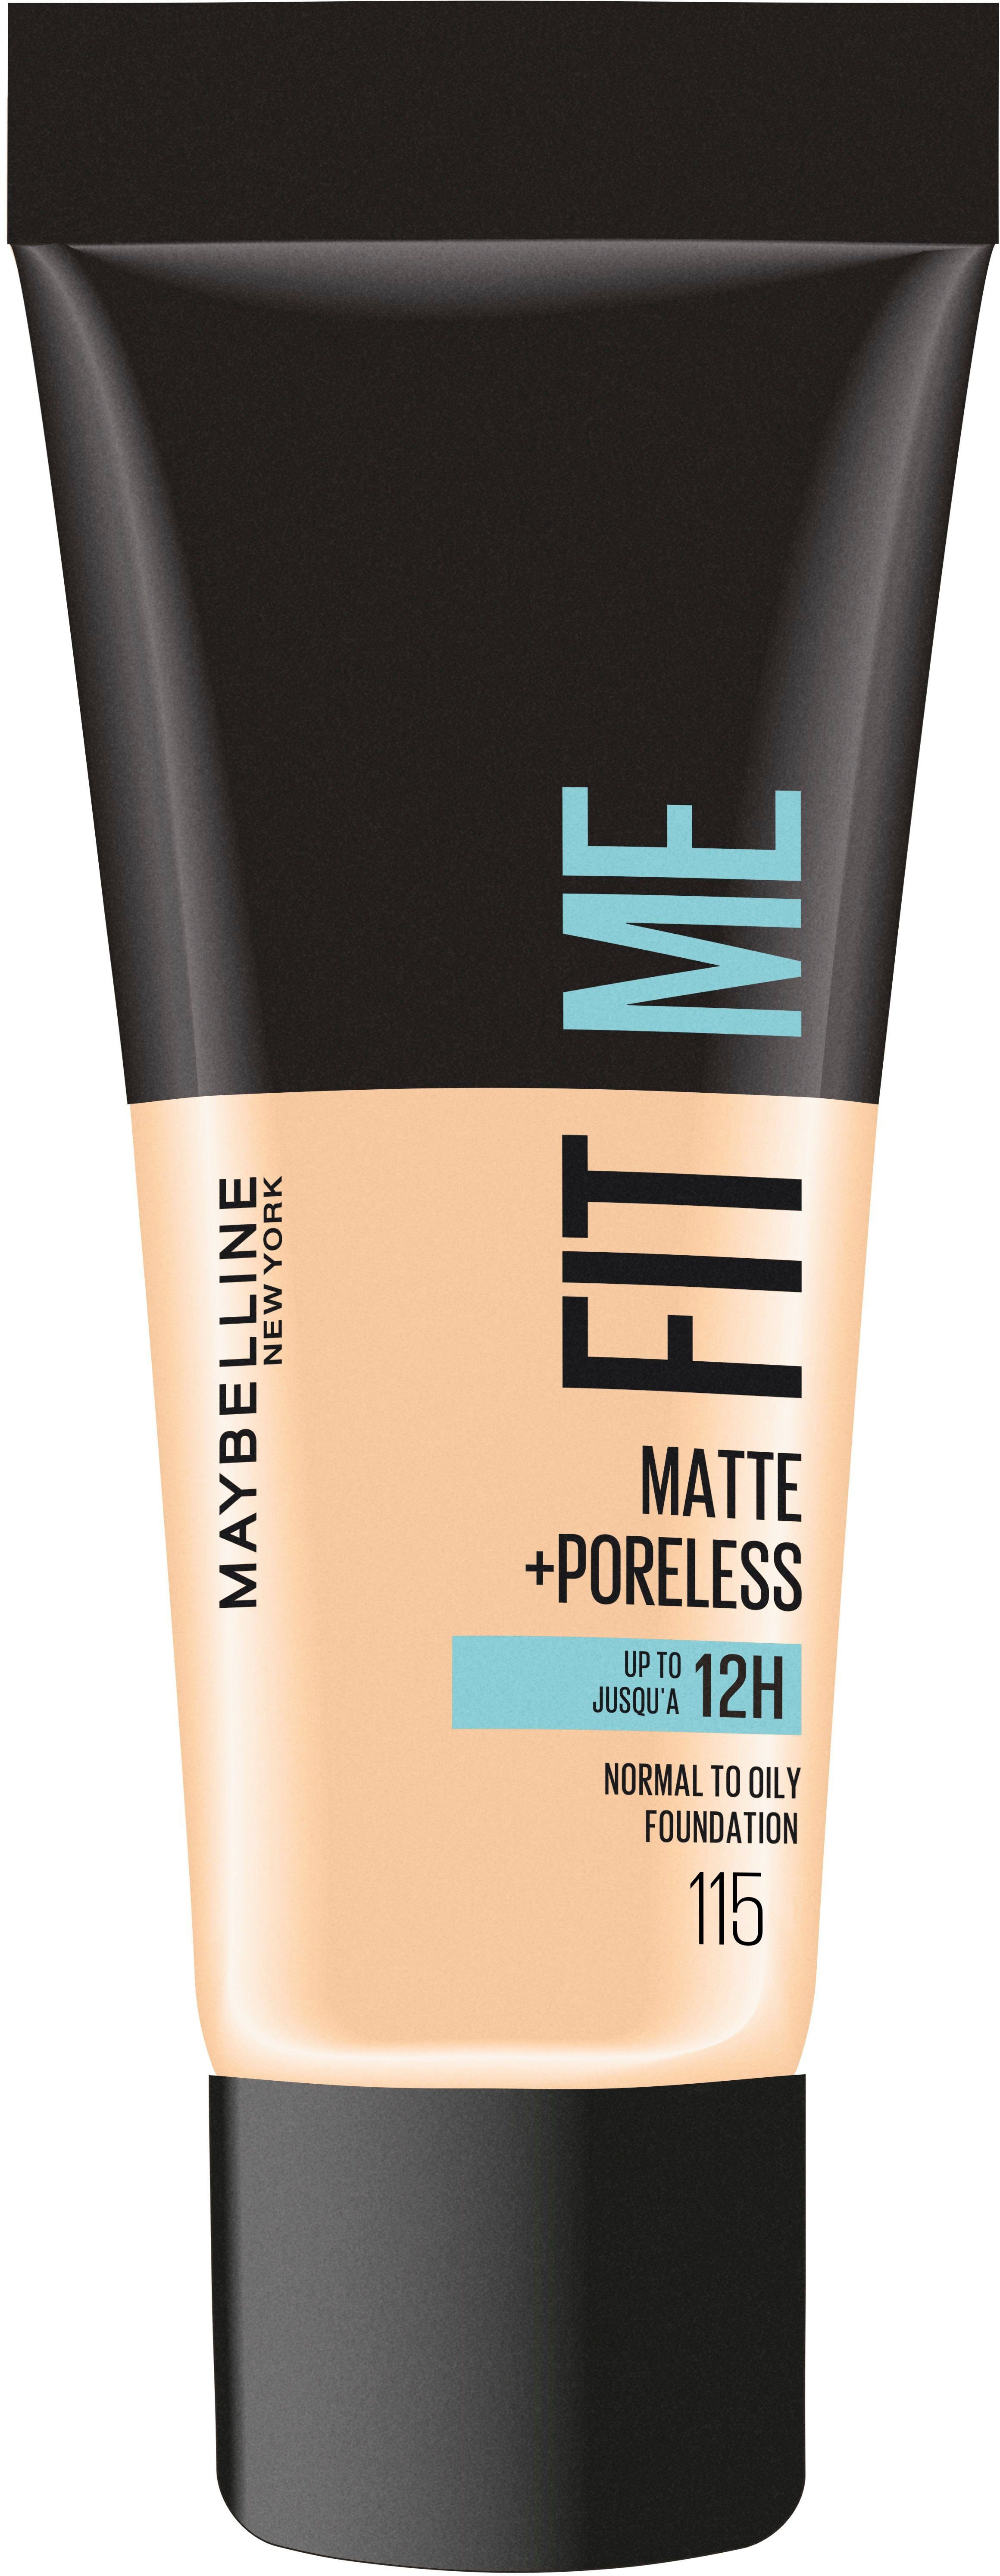 New NEW MAYBELLINE Fit York Me! Foundation YORK Poreless Maybelline Matte Make-Up +